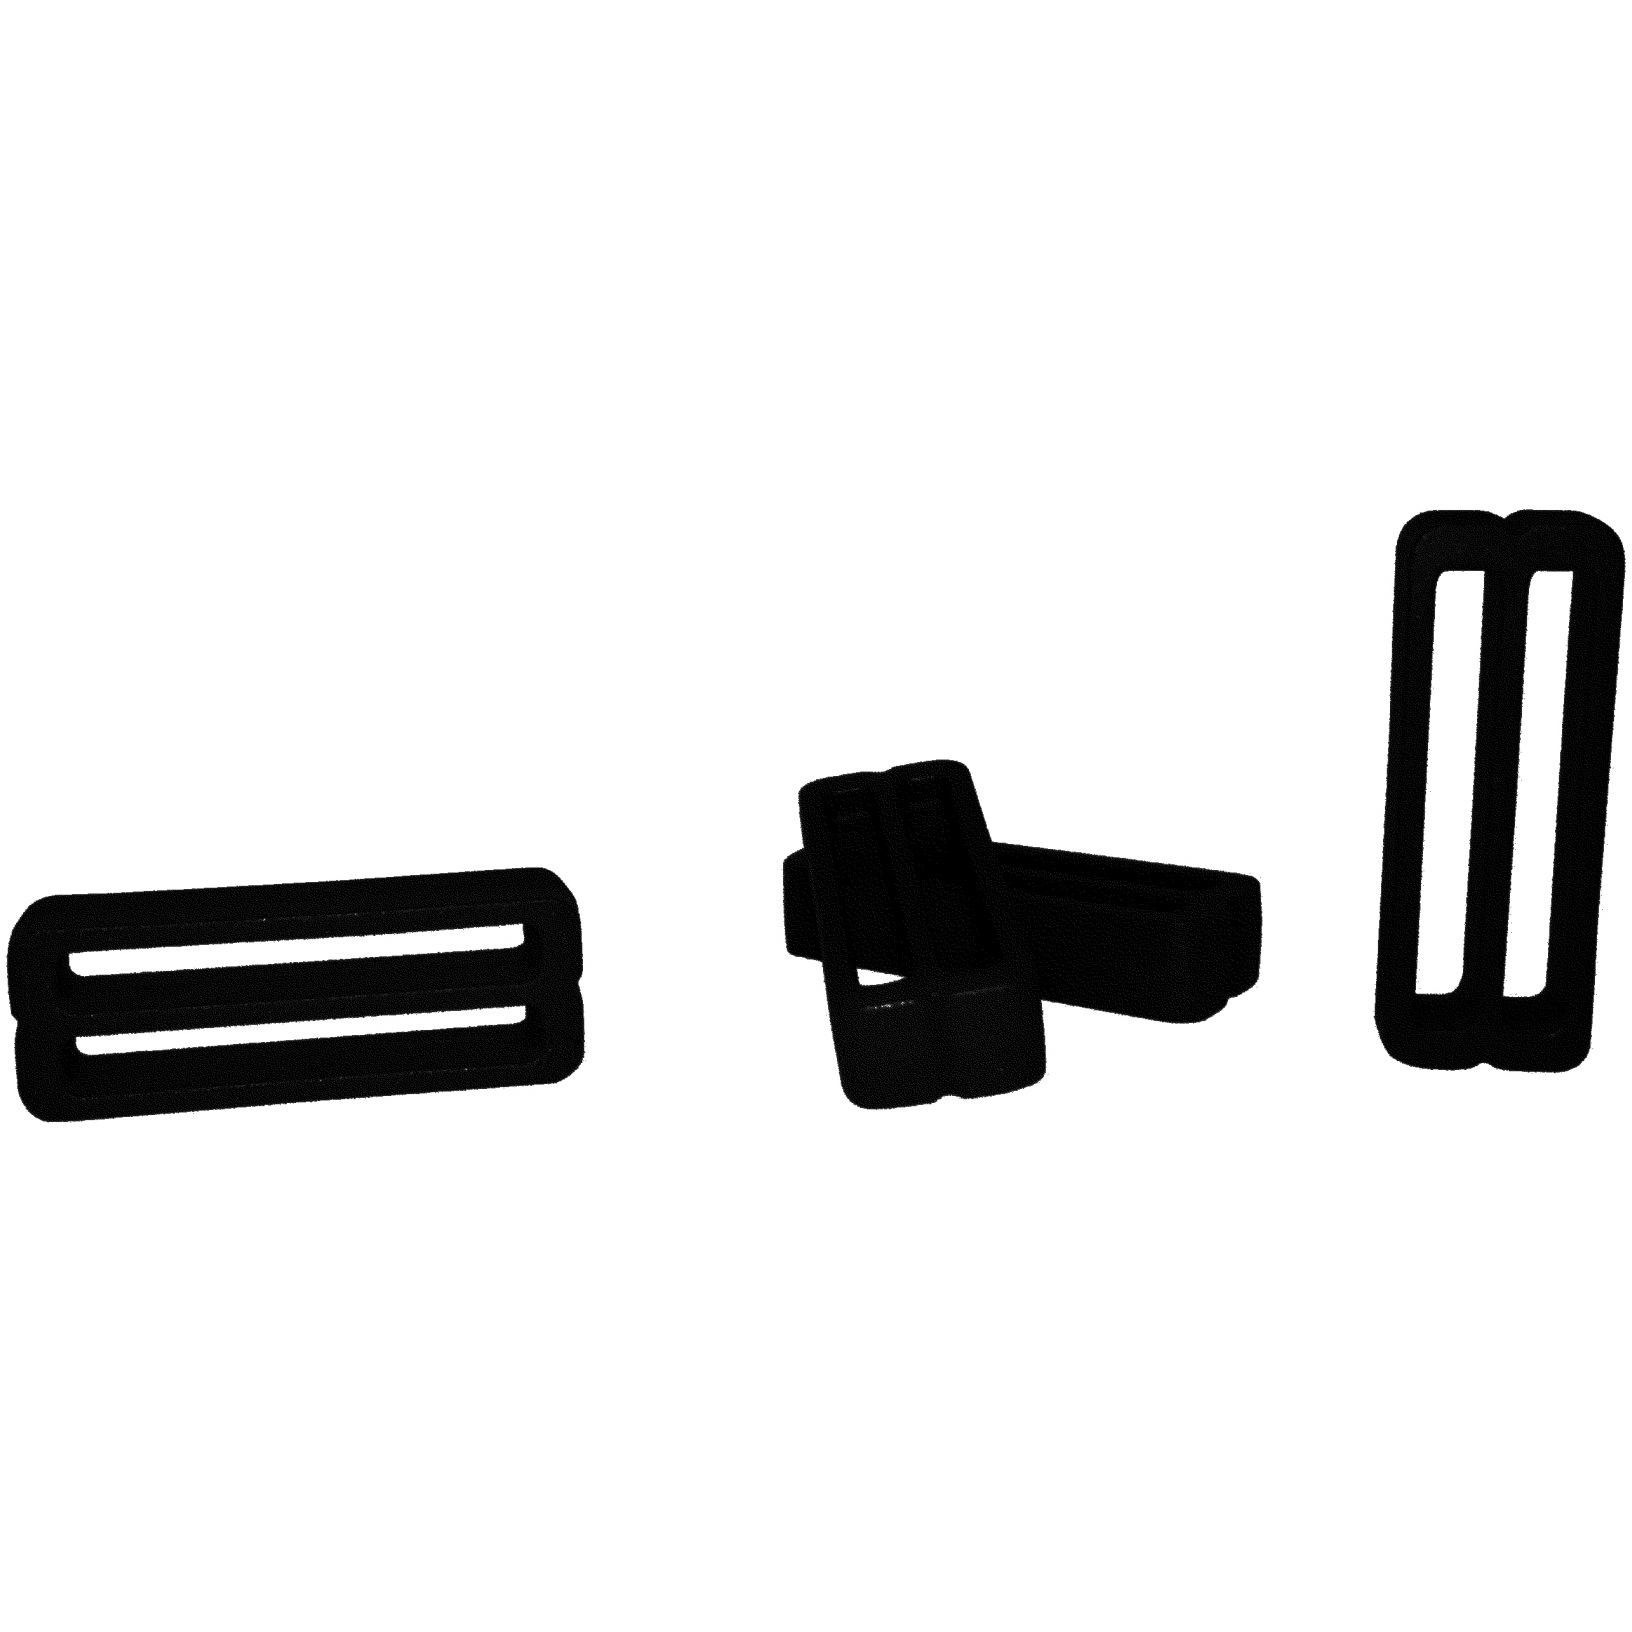 Productfoto van FixPlus Strapkeeper for 35 cm, 46cm &amp; 66cm Straps - 4 pcs - black